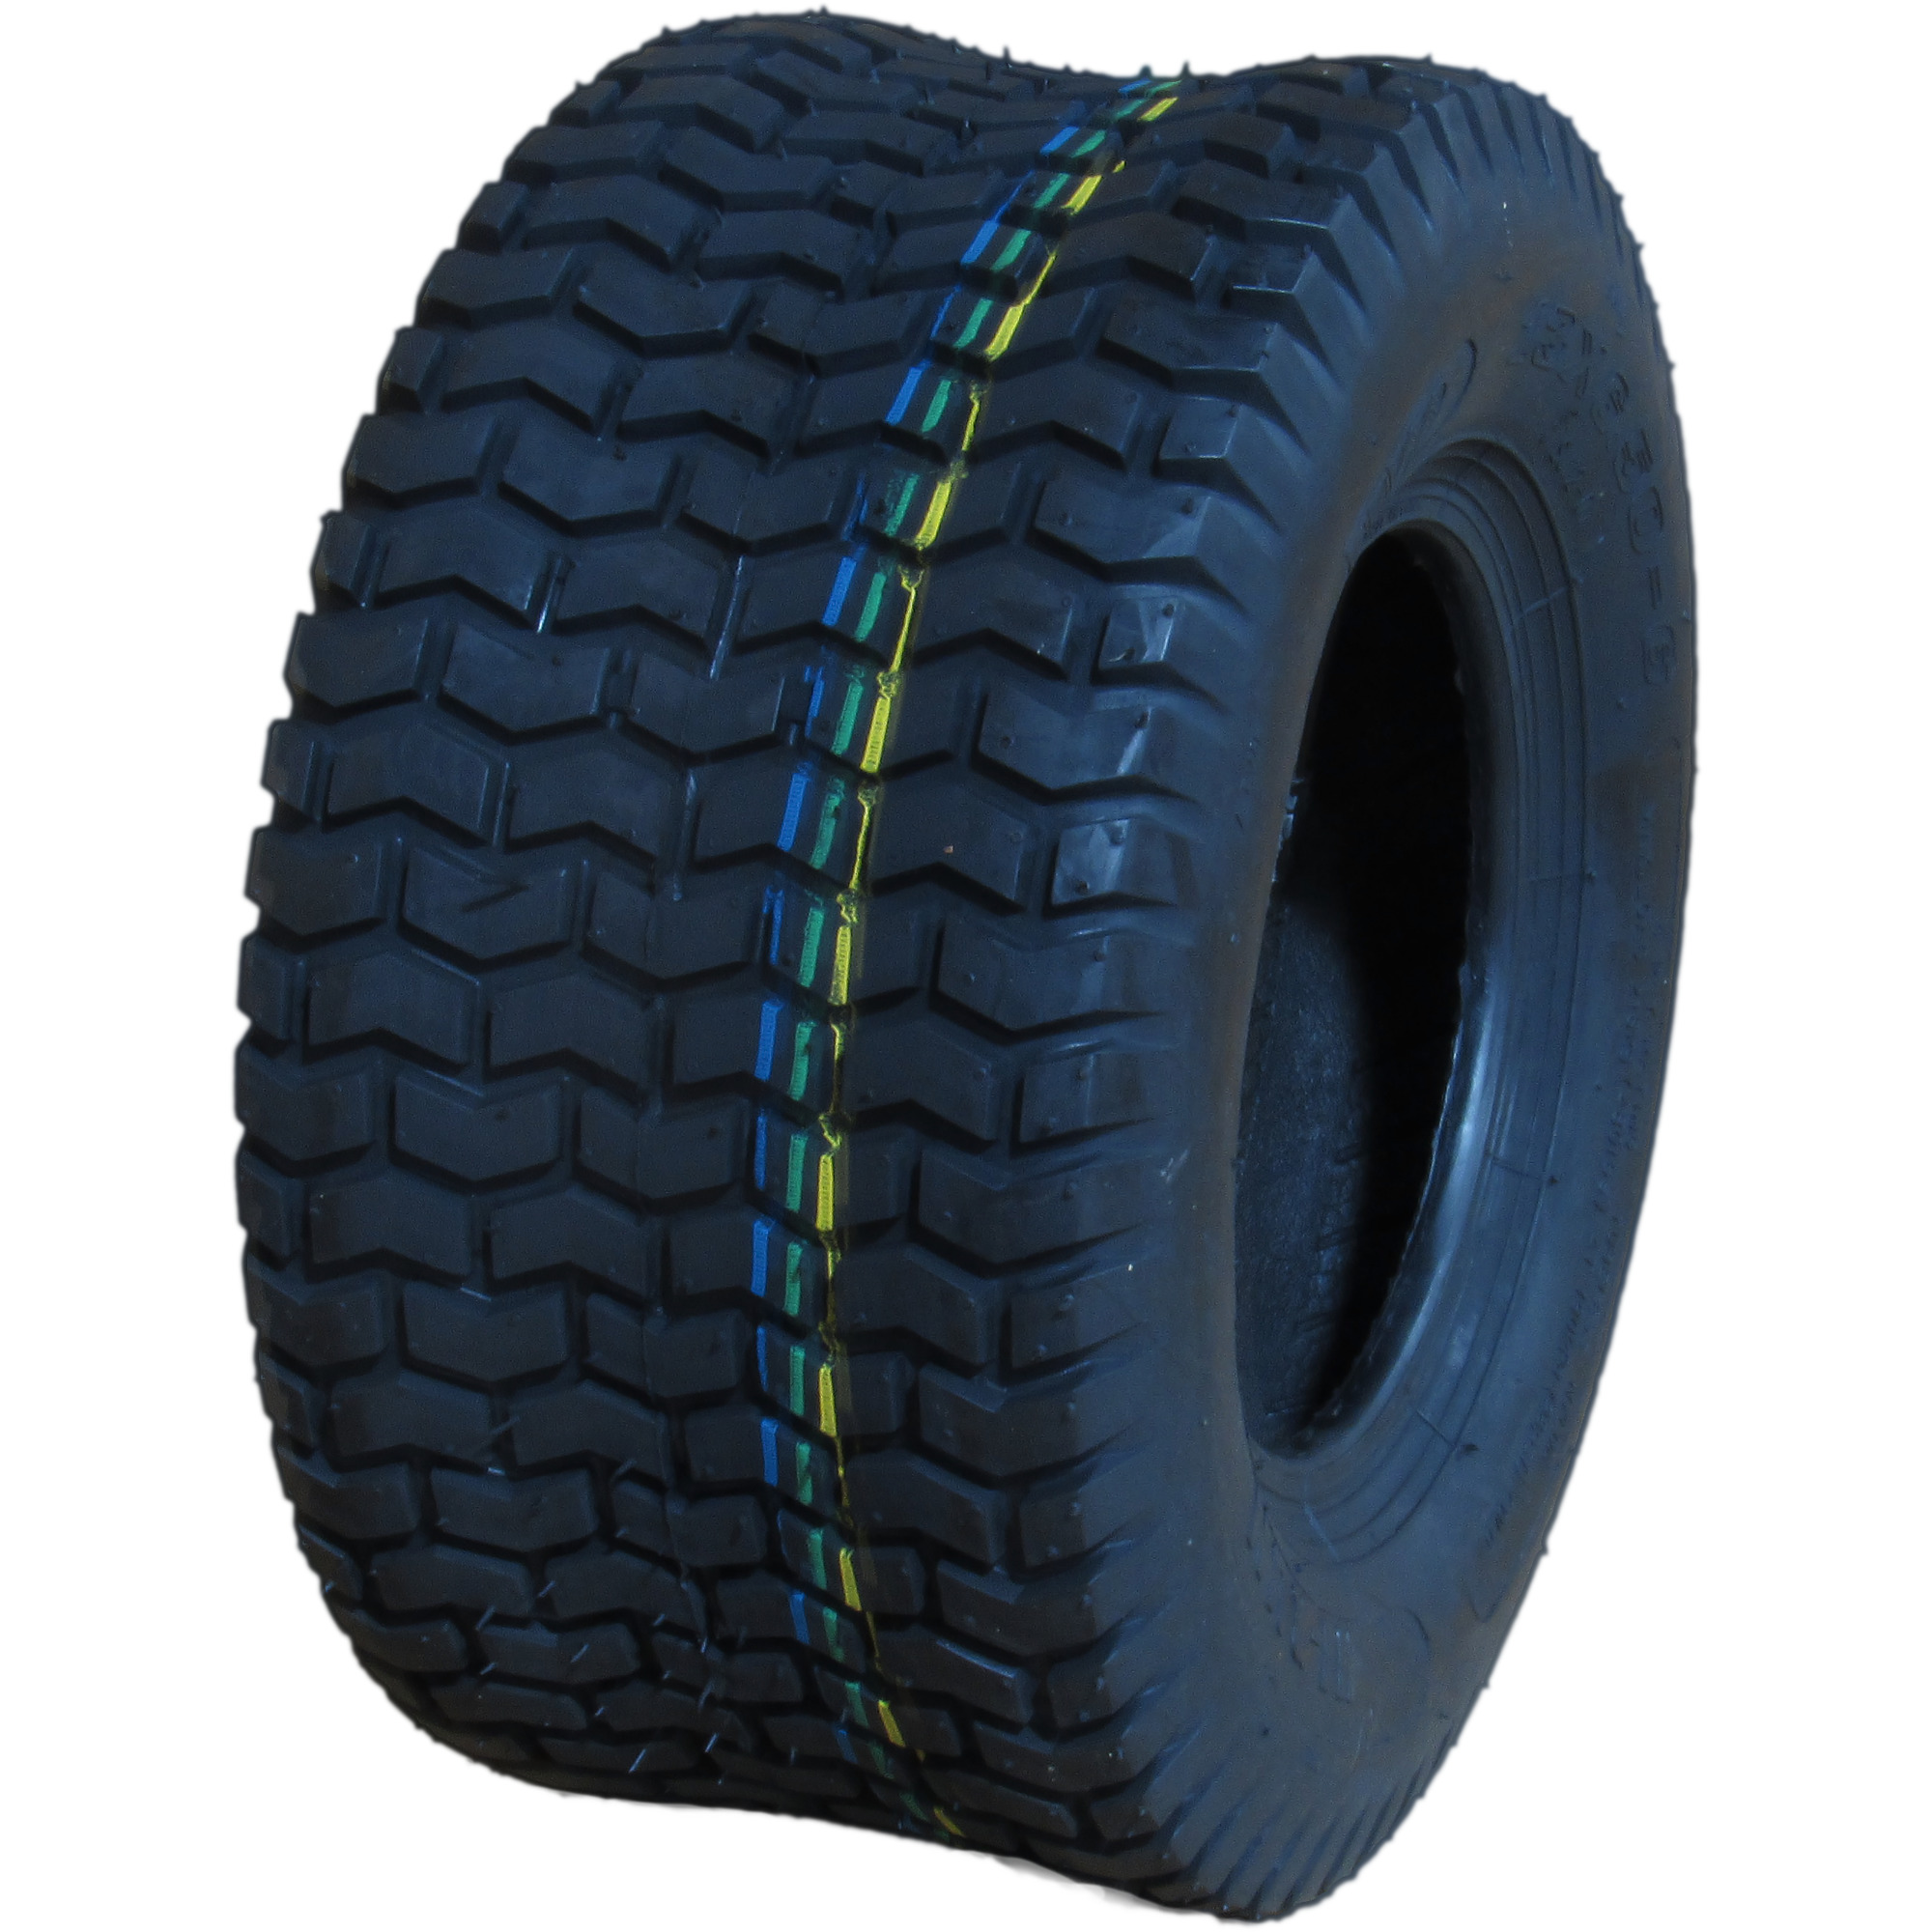 HI-RUN, Lawn Garden Tire, SU12 Turf II, Tire Size 13X6.50-6 Load Range Rating B, Model WD1196